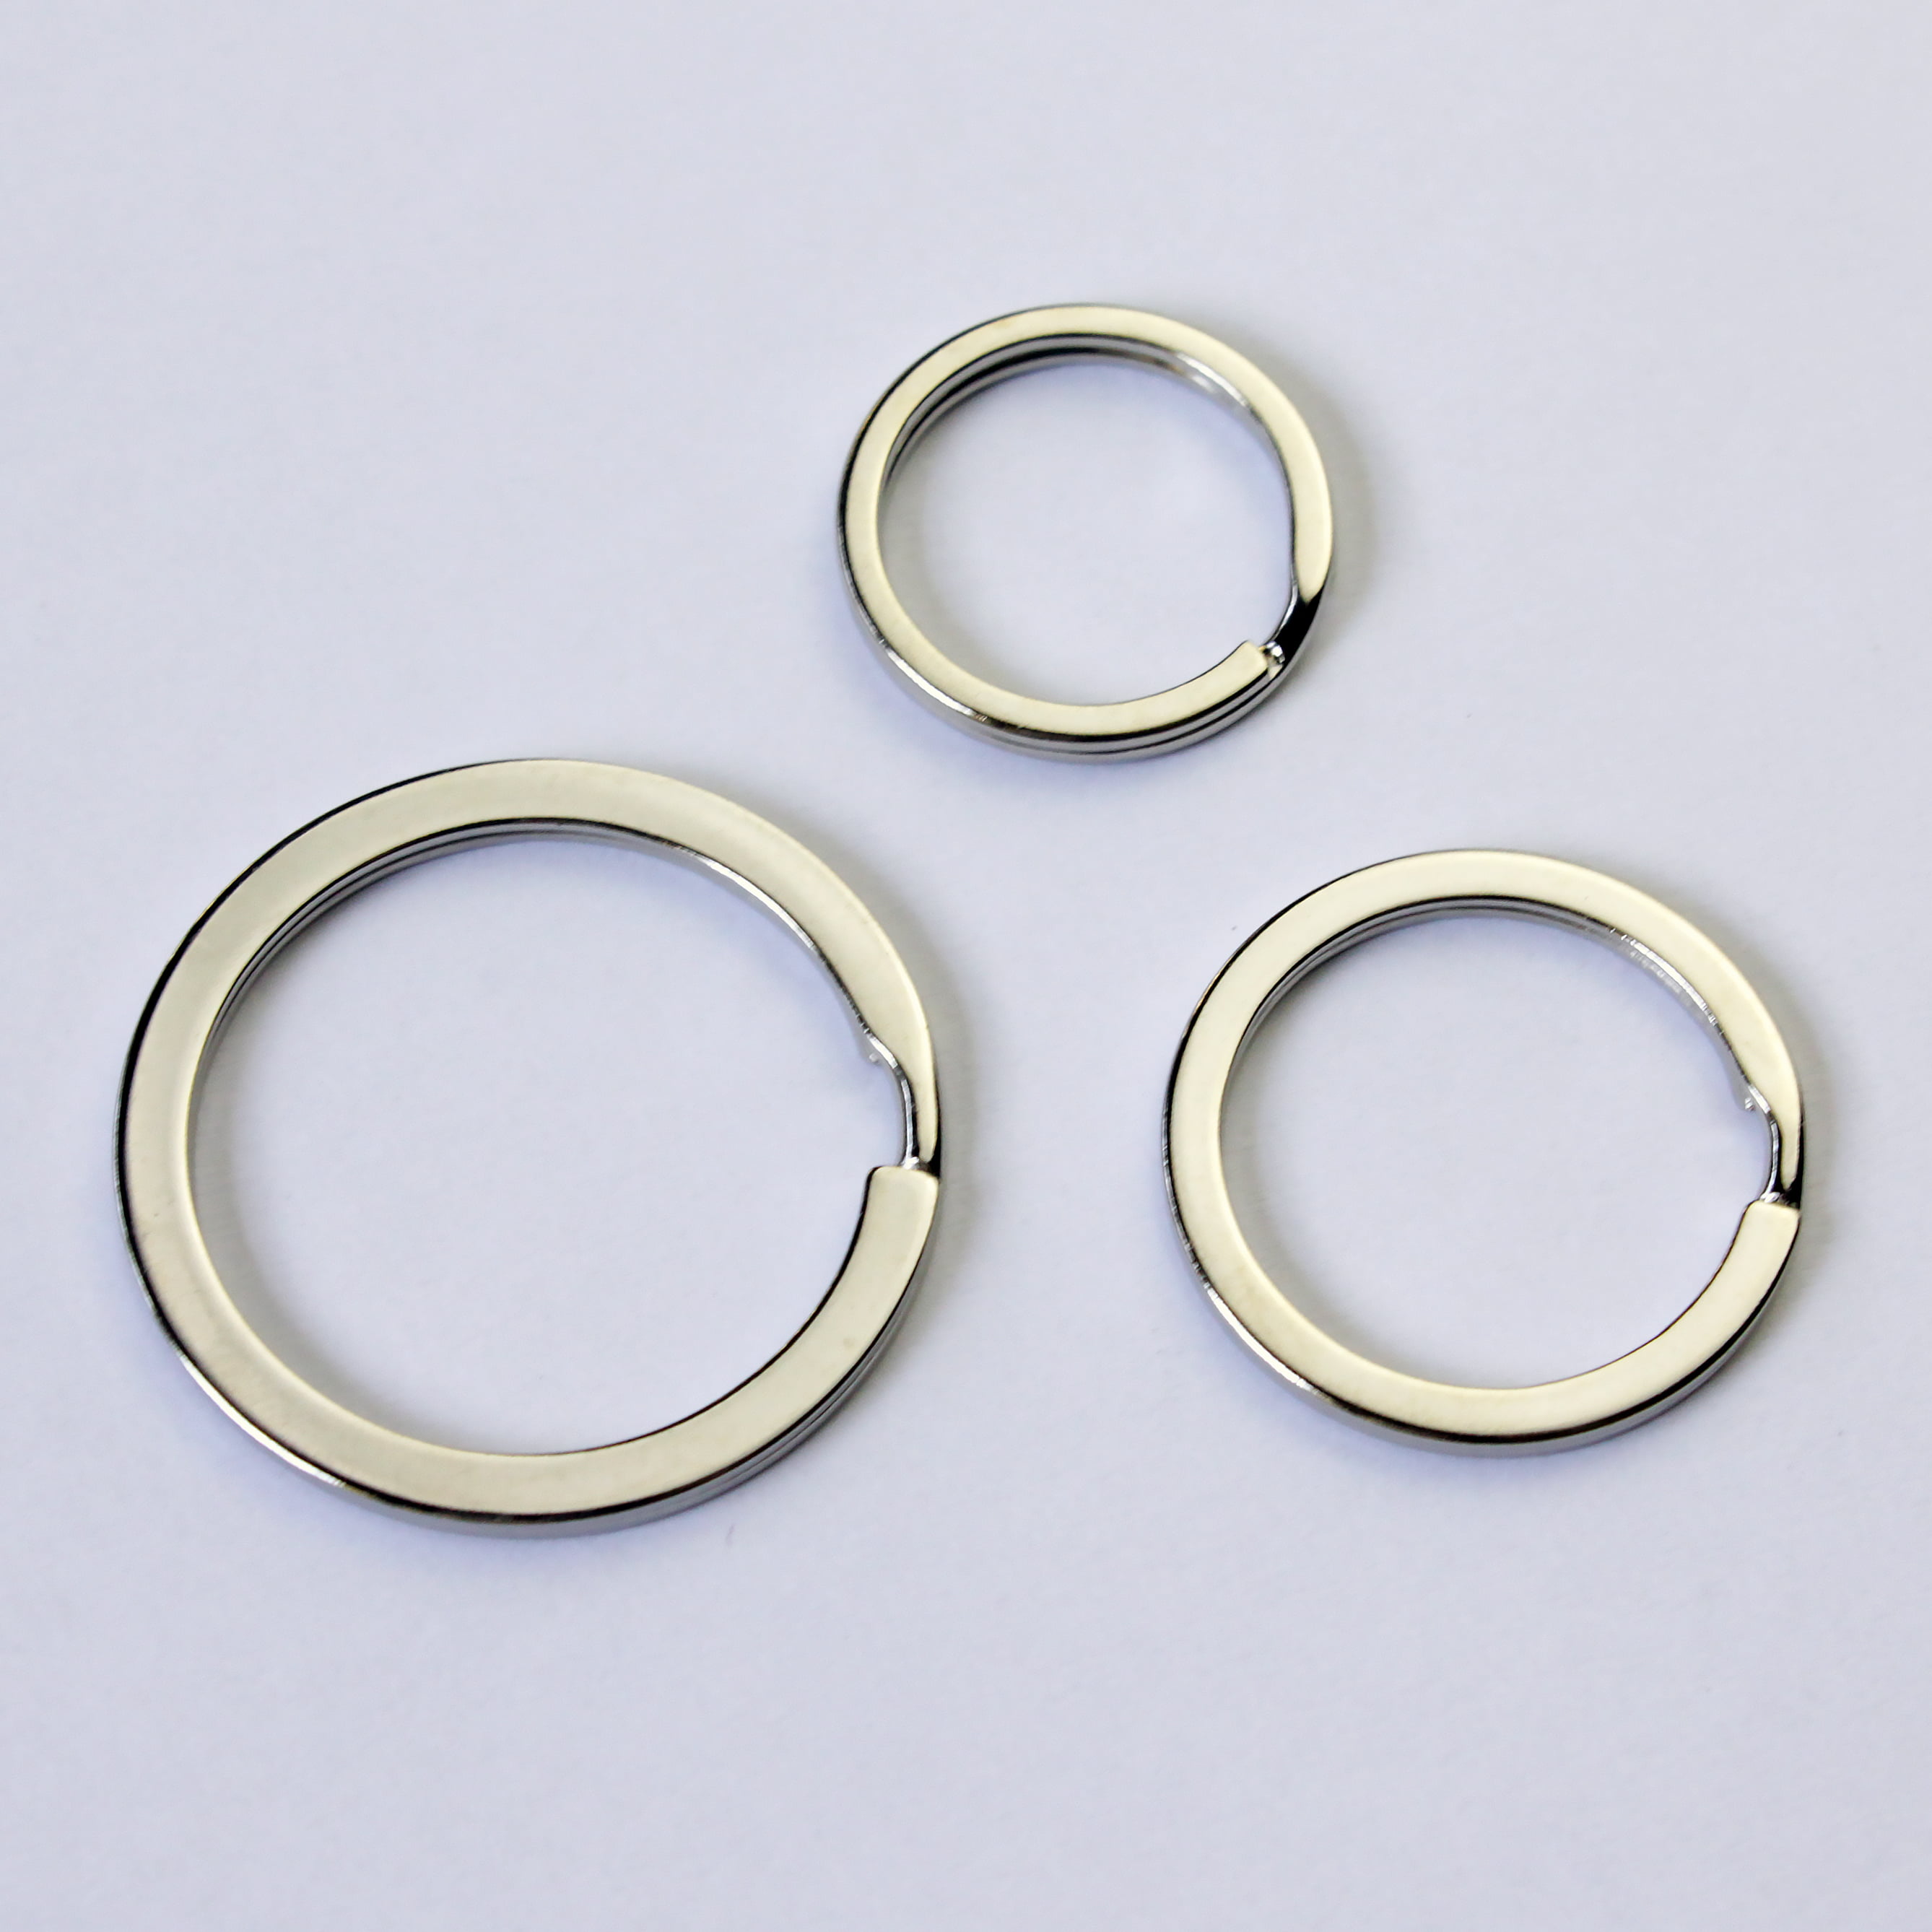 100 pcs Split Key Ring with Chain Arts & Crafts Nickel Plated Split Key Ring for Home Keys Organization QMAY 1/25mm Split Key Chain Ring Lanyards